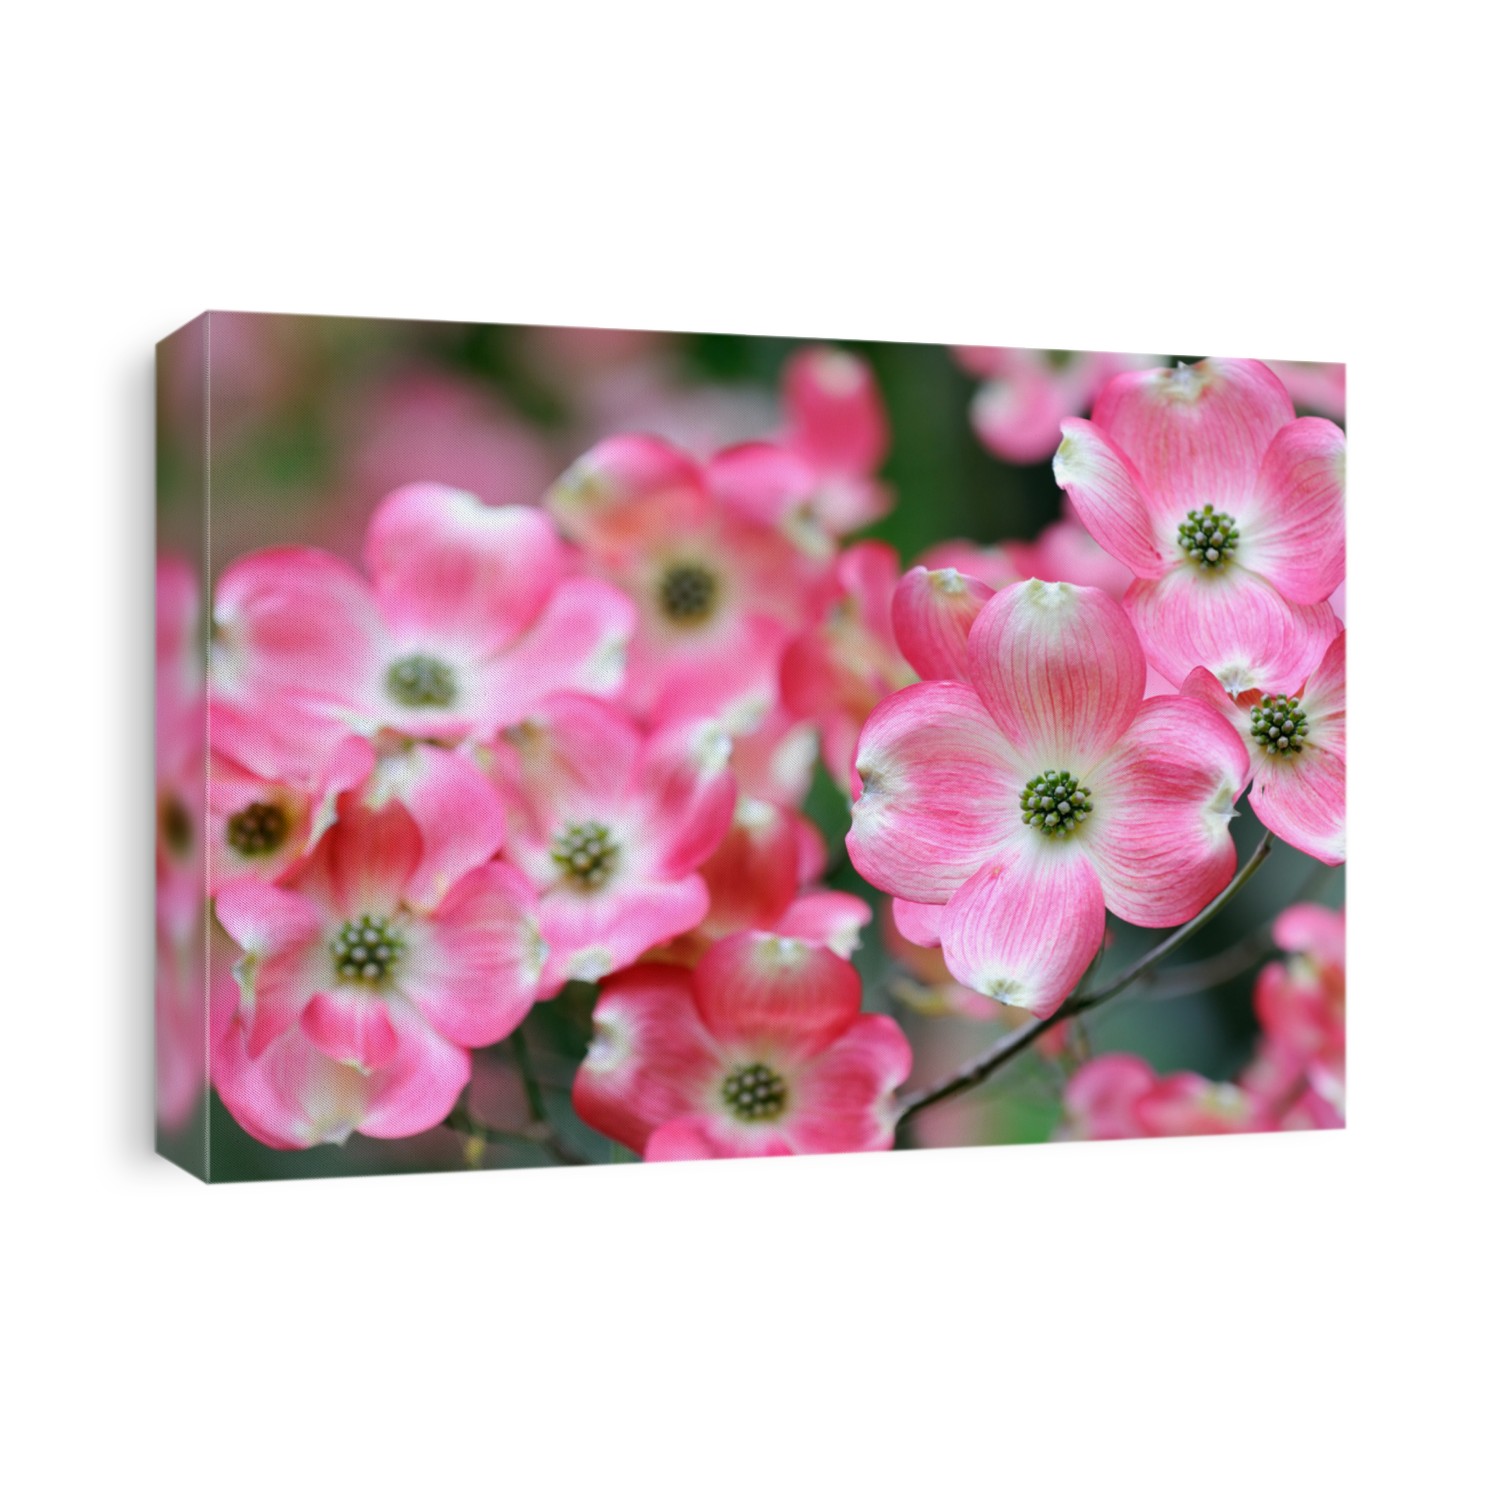 Flowering Dogwood, Pink Flowers Closeup